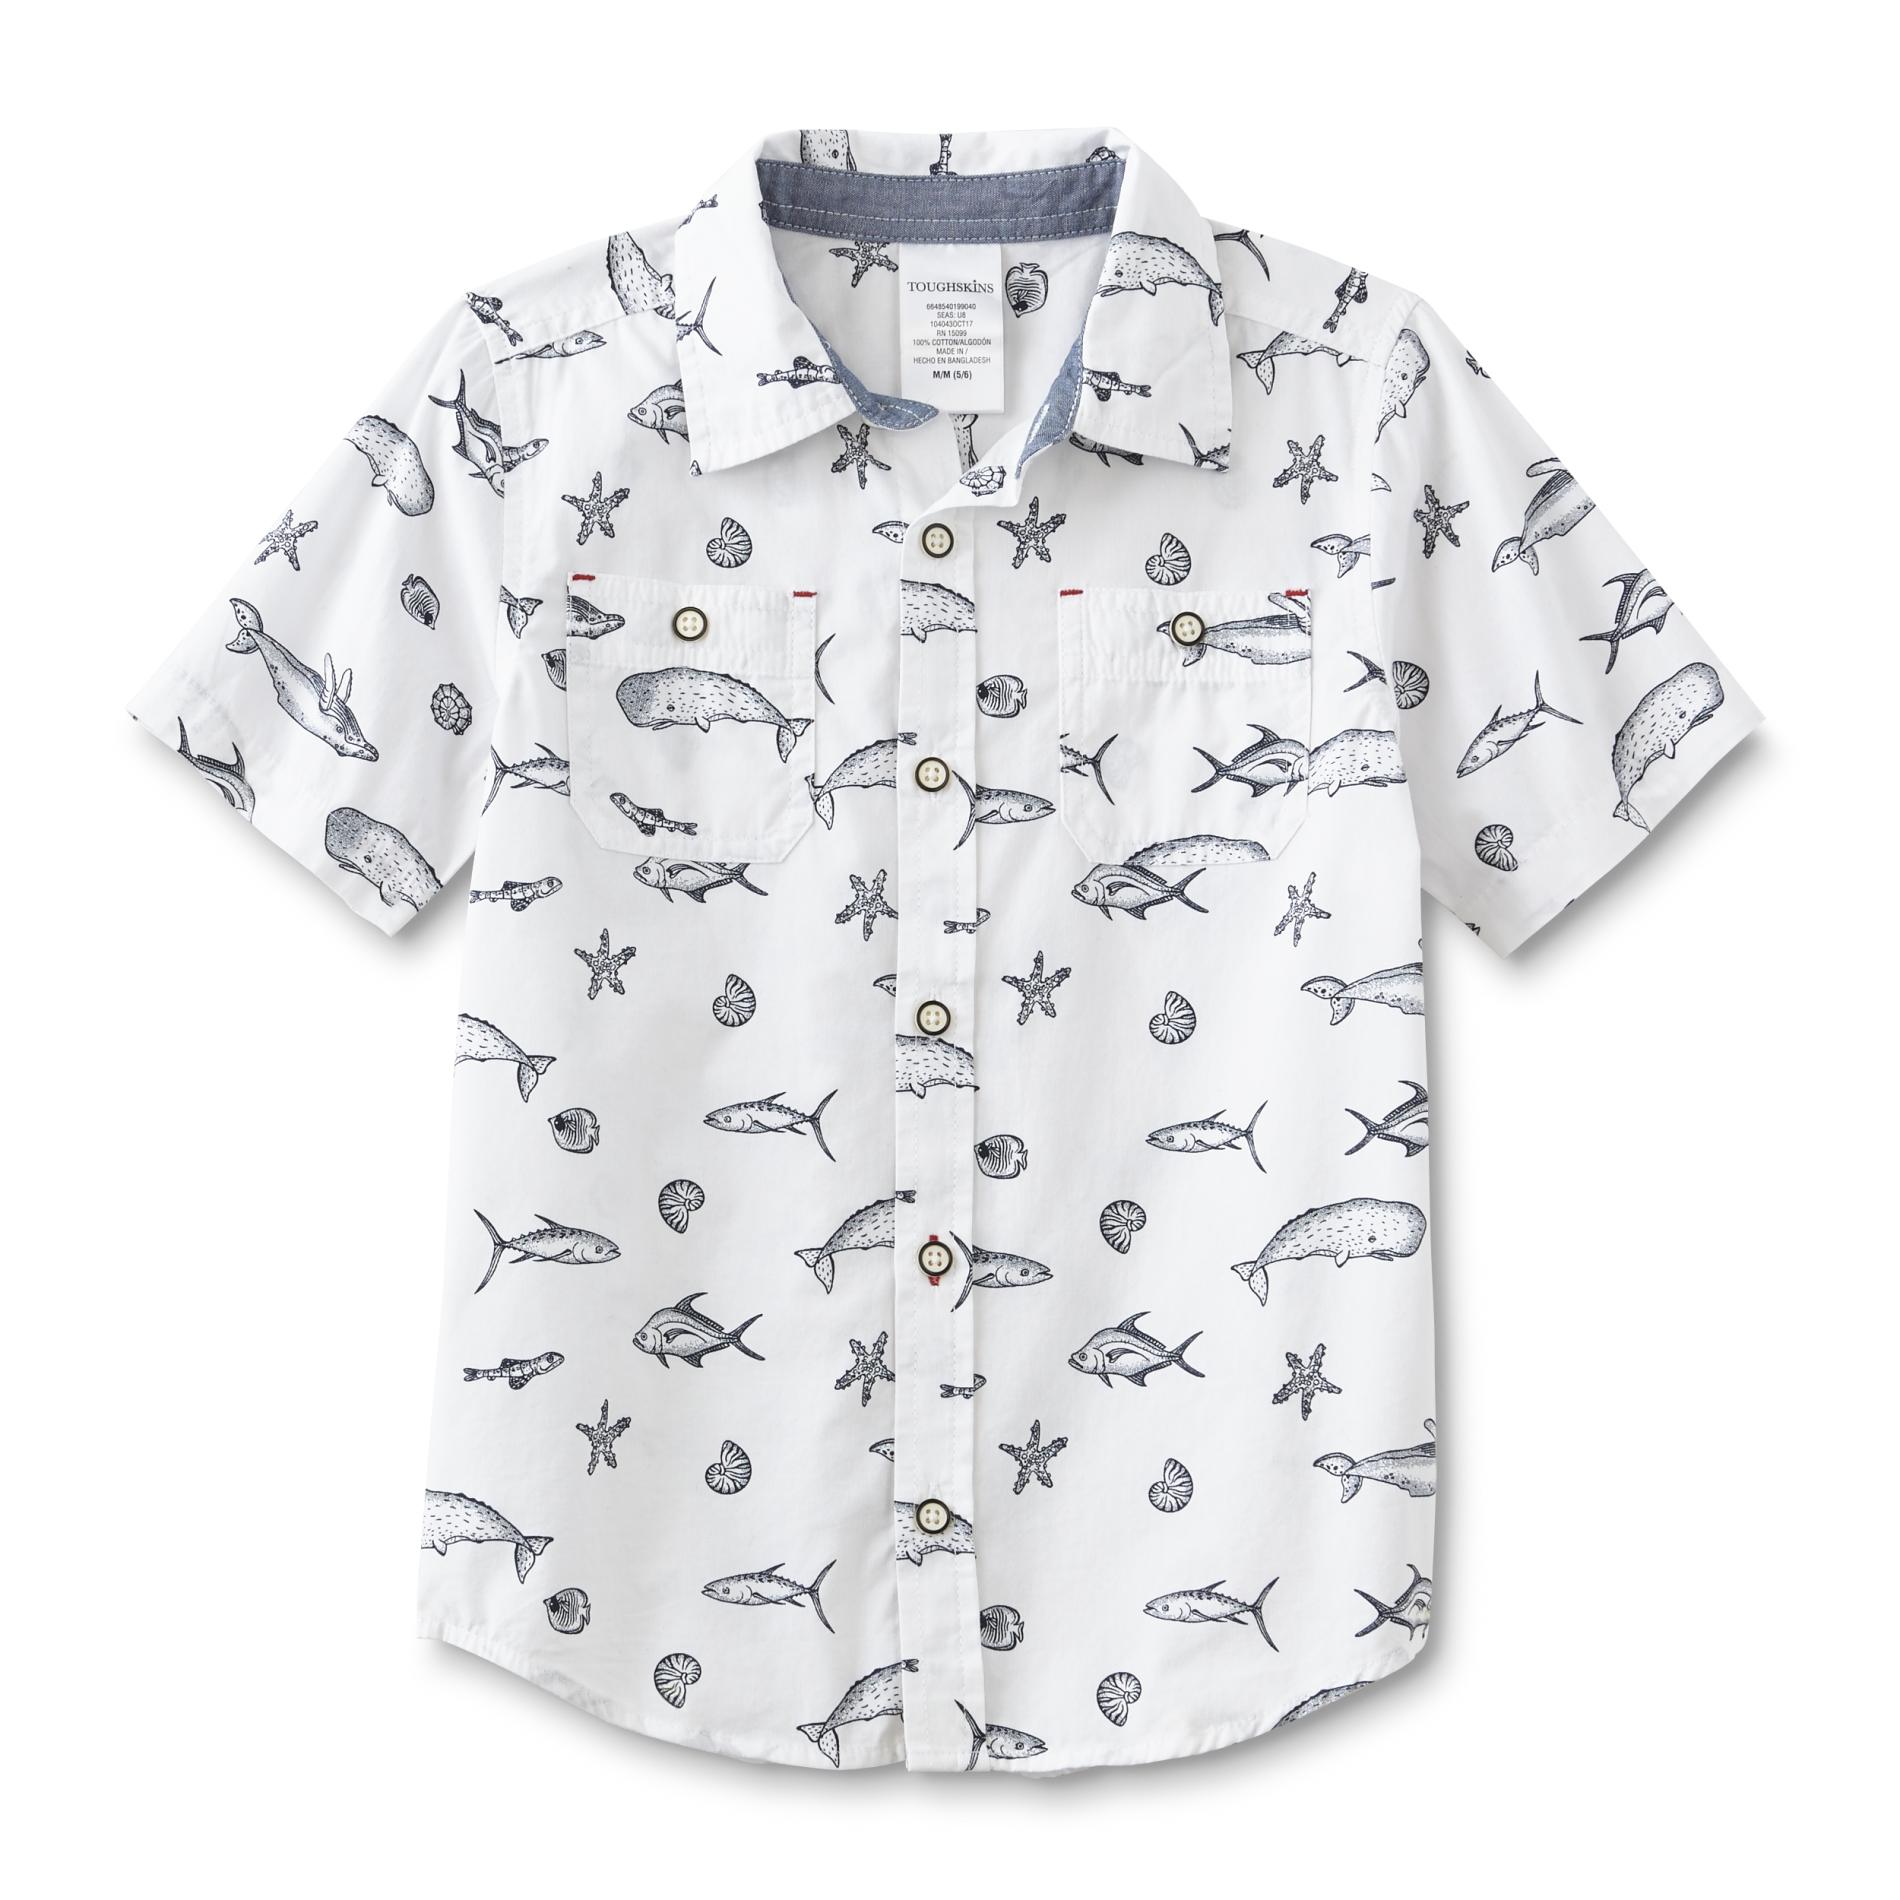 Toughskins Infant & Toddler Boys' Button-Front Shirt - Sea Life